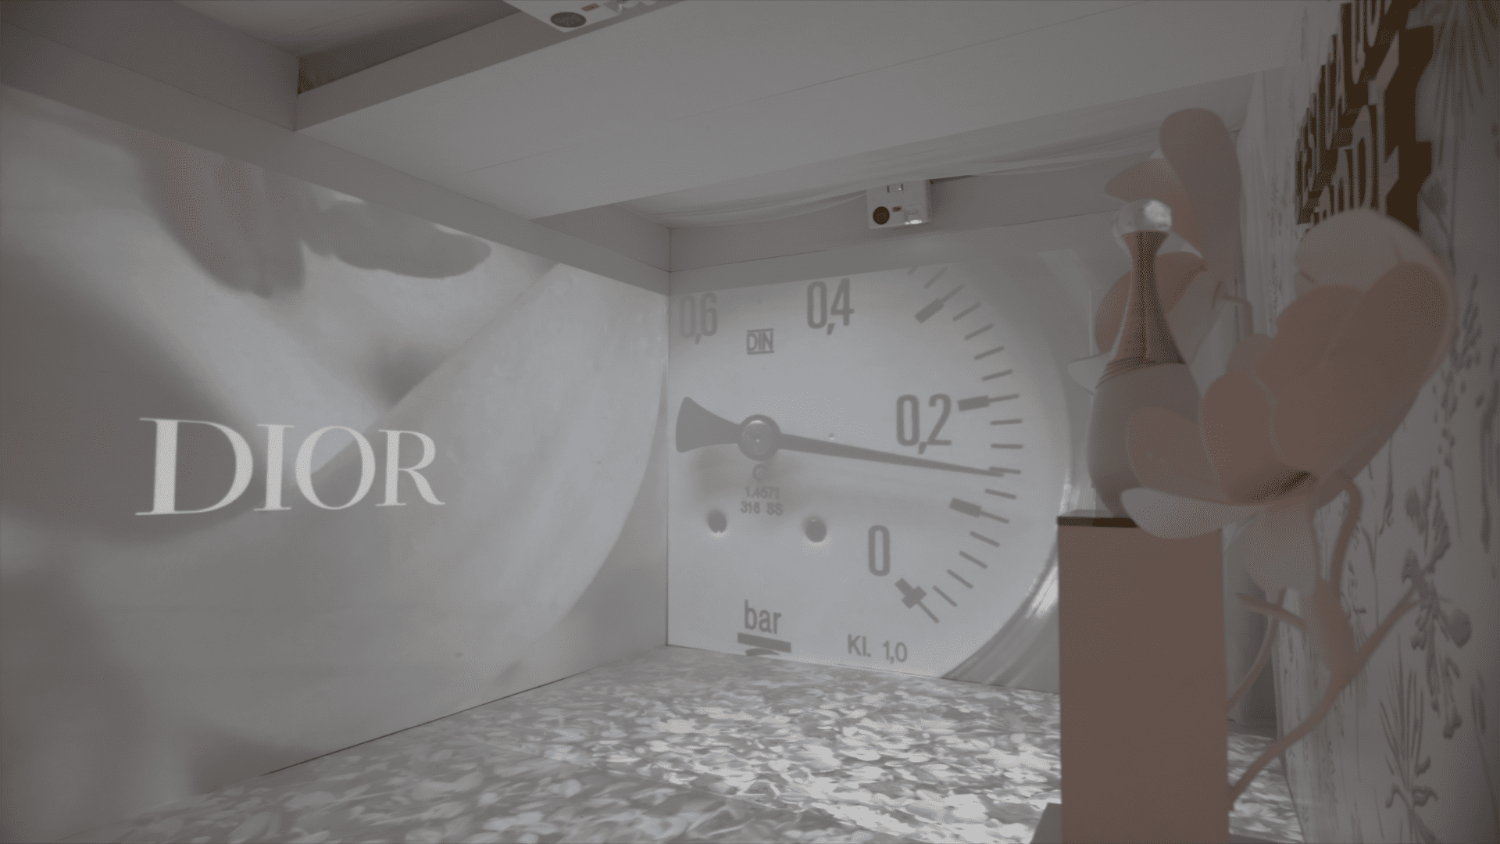 DIOR - Dior's Immersive Room - 2